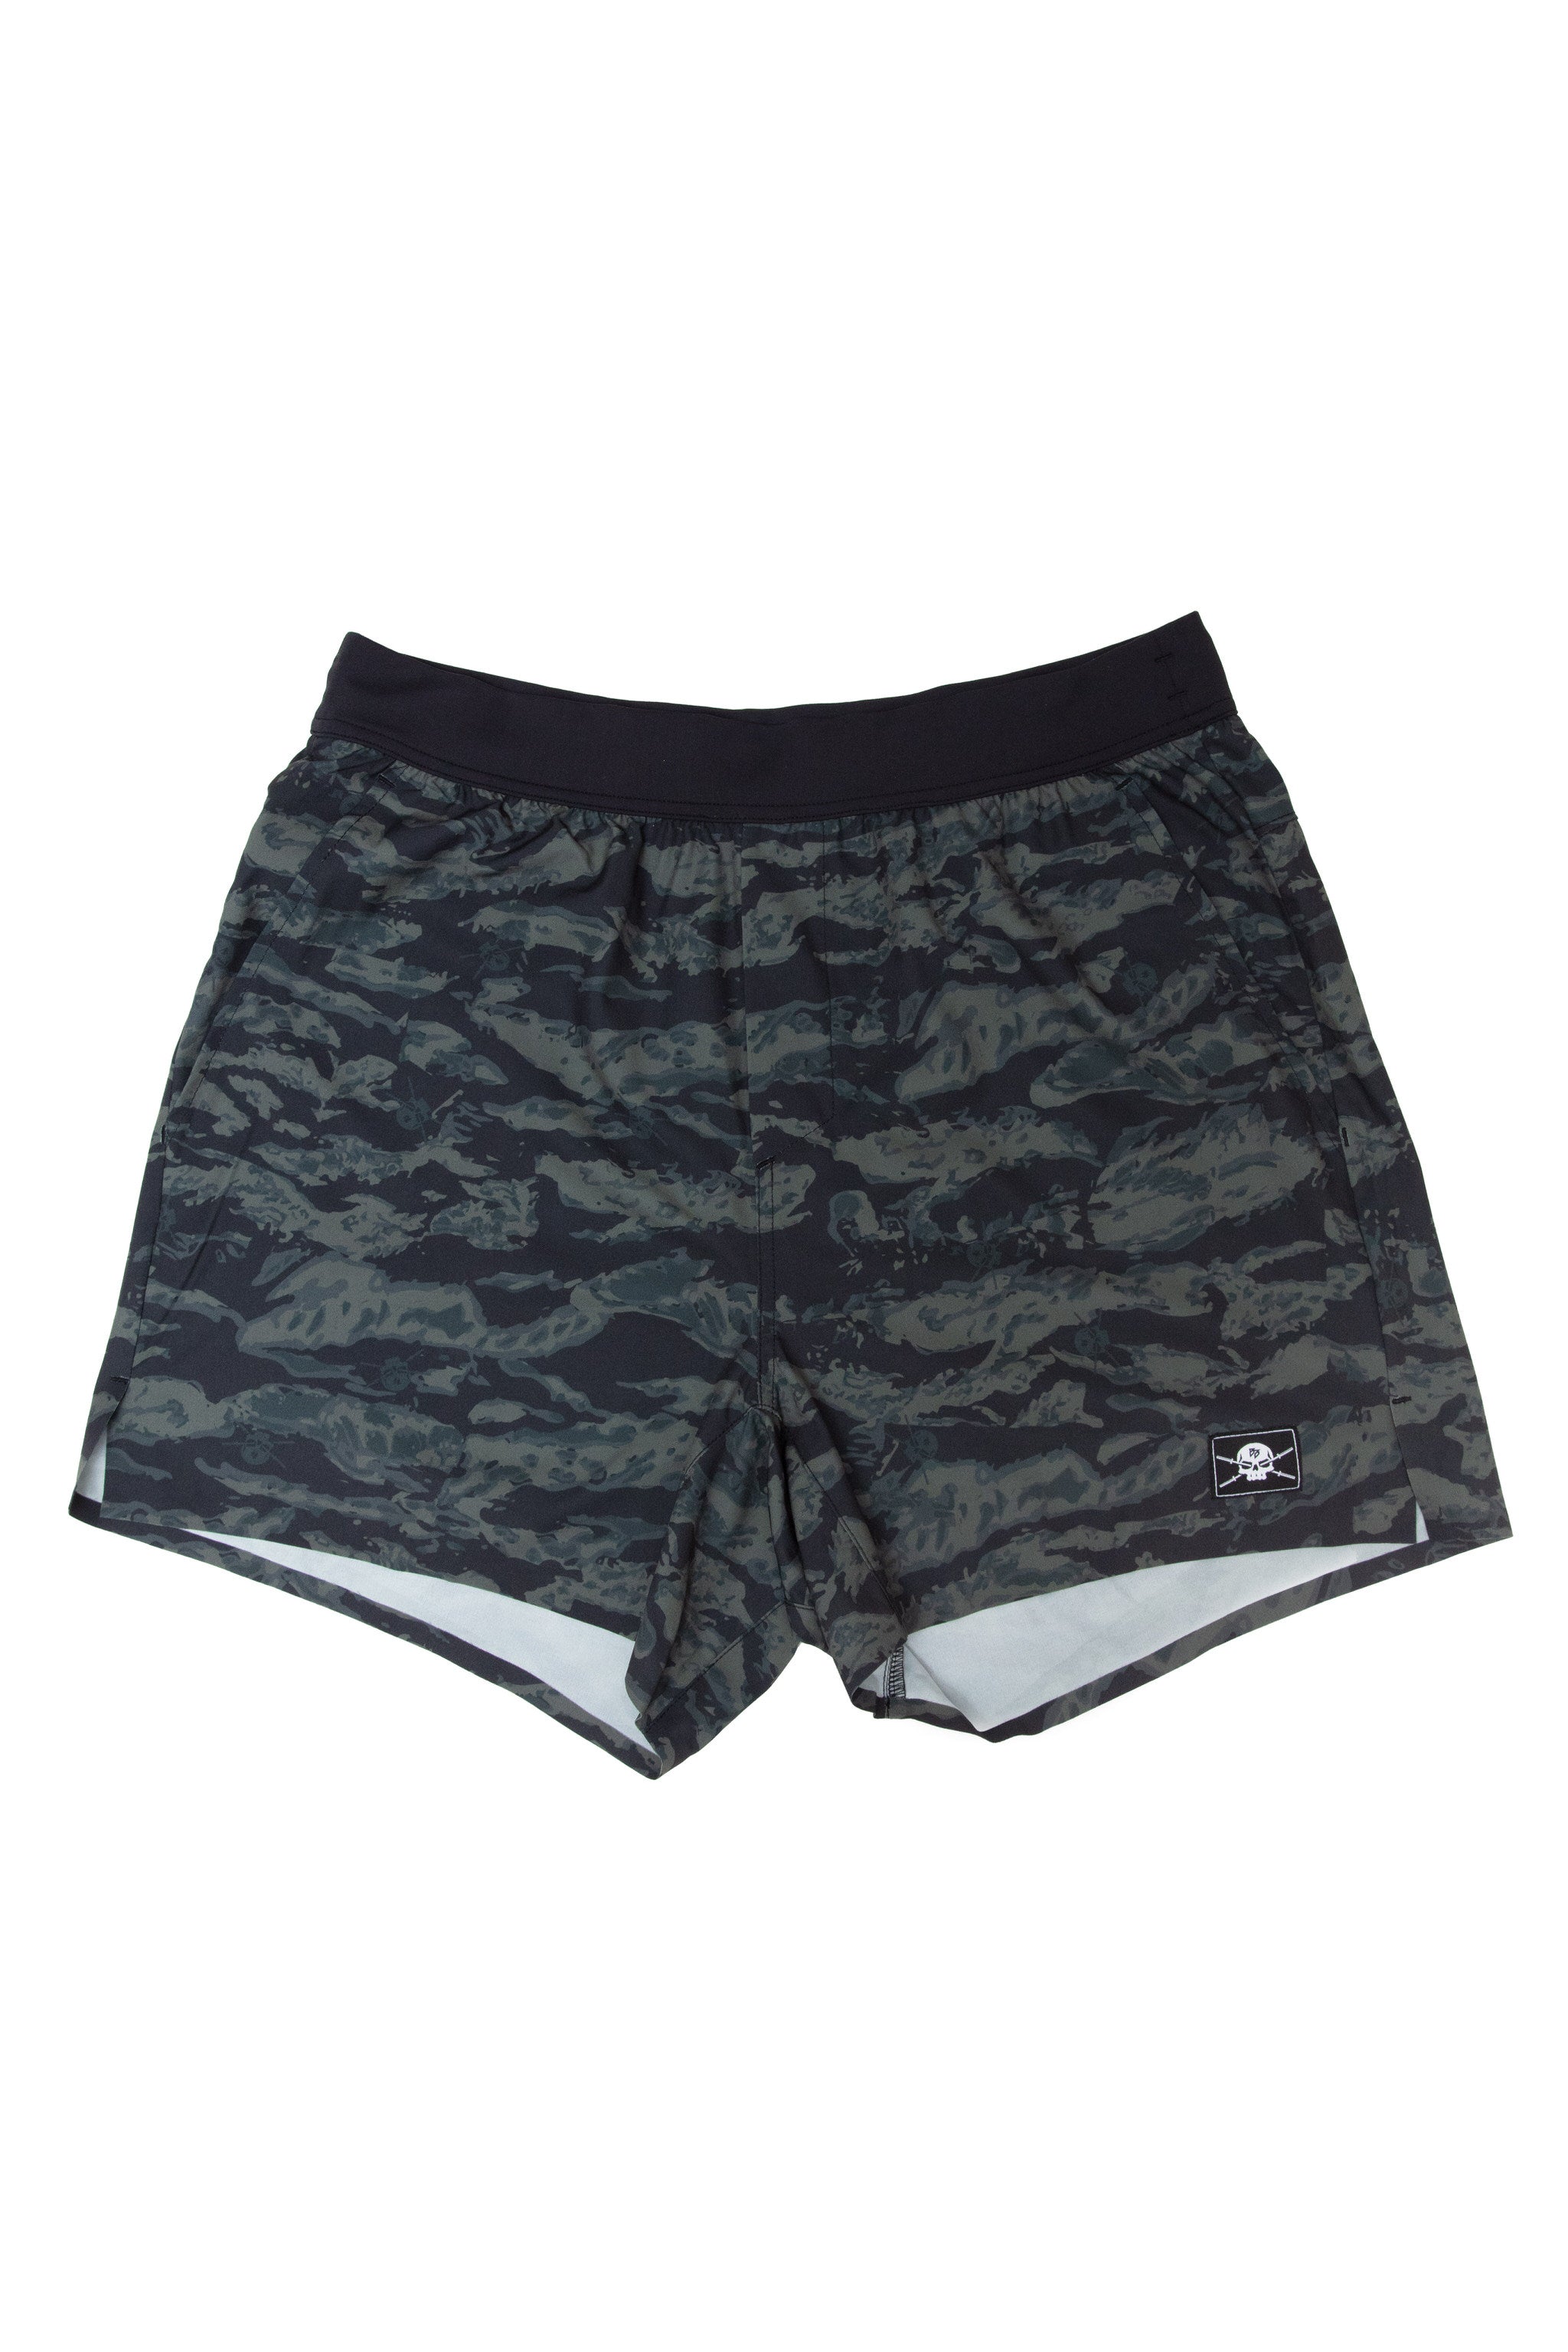 Amphibious MKIII - Training Shorts (Olive Tiger Camo)